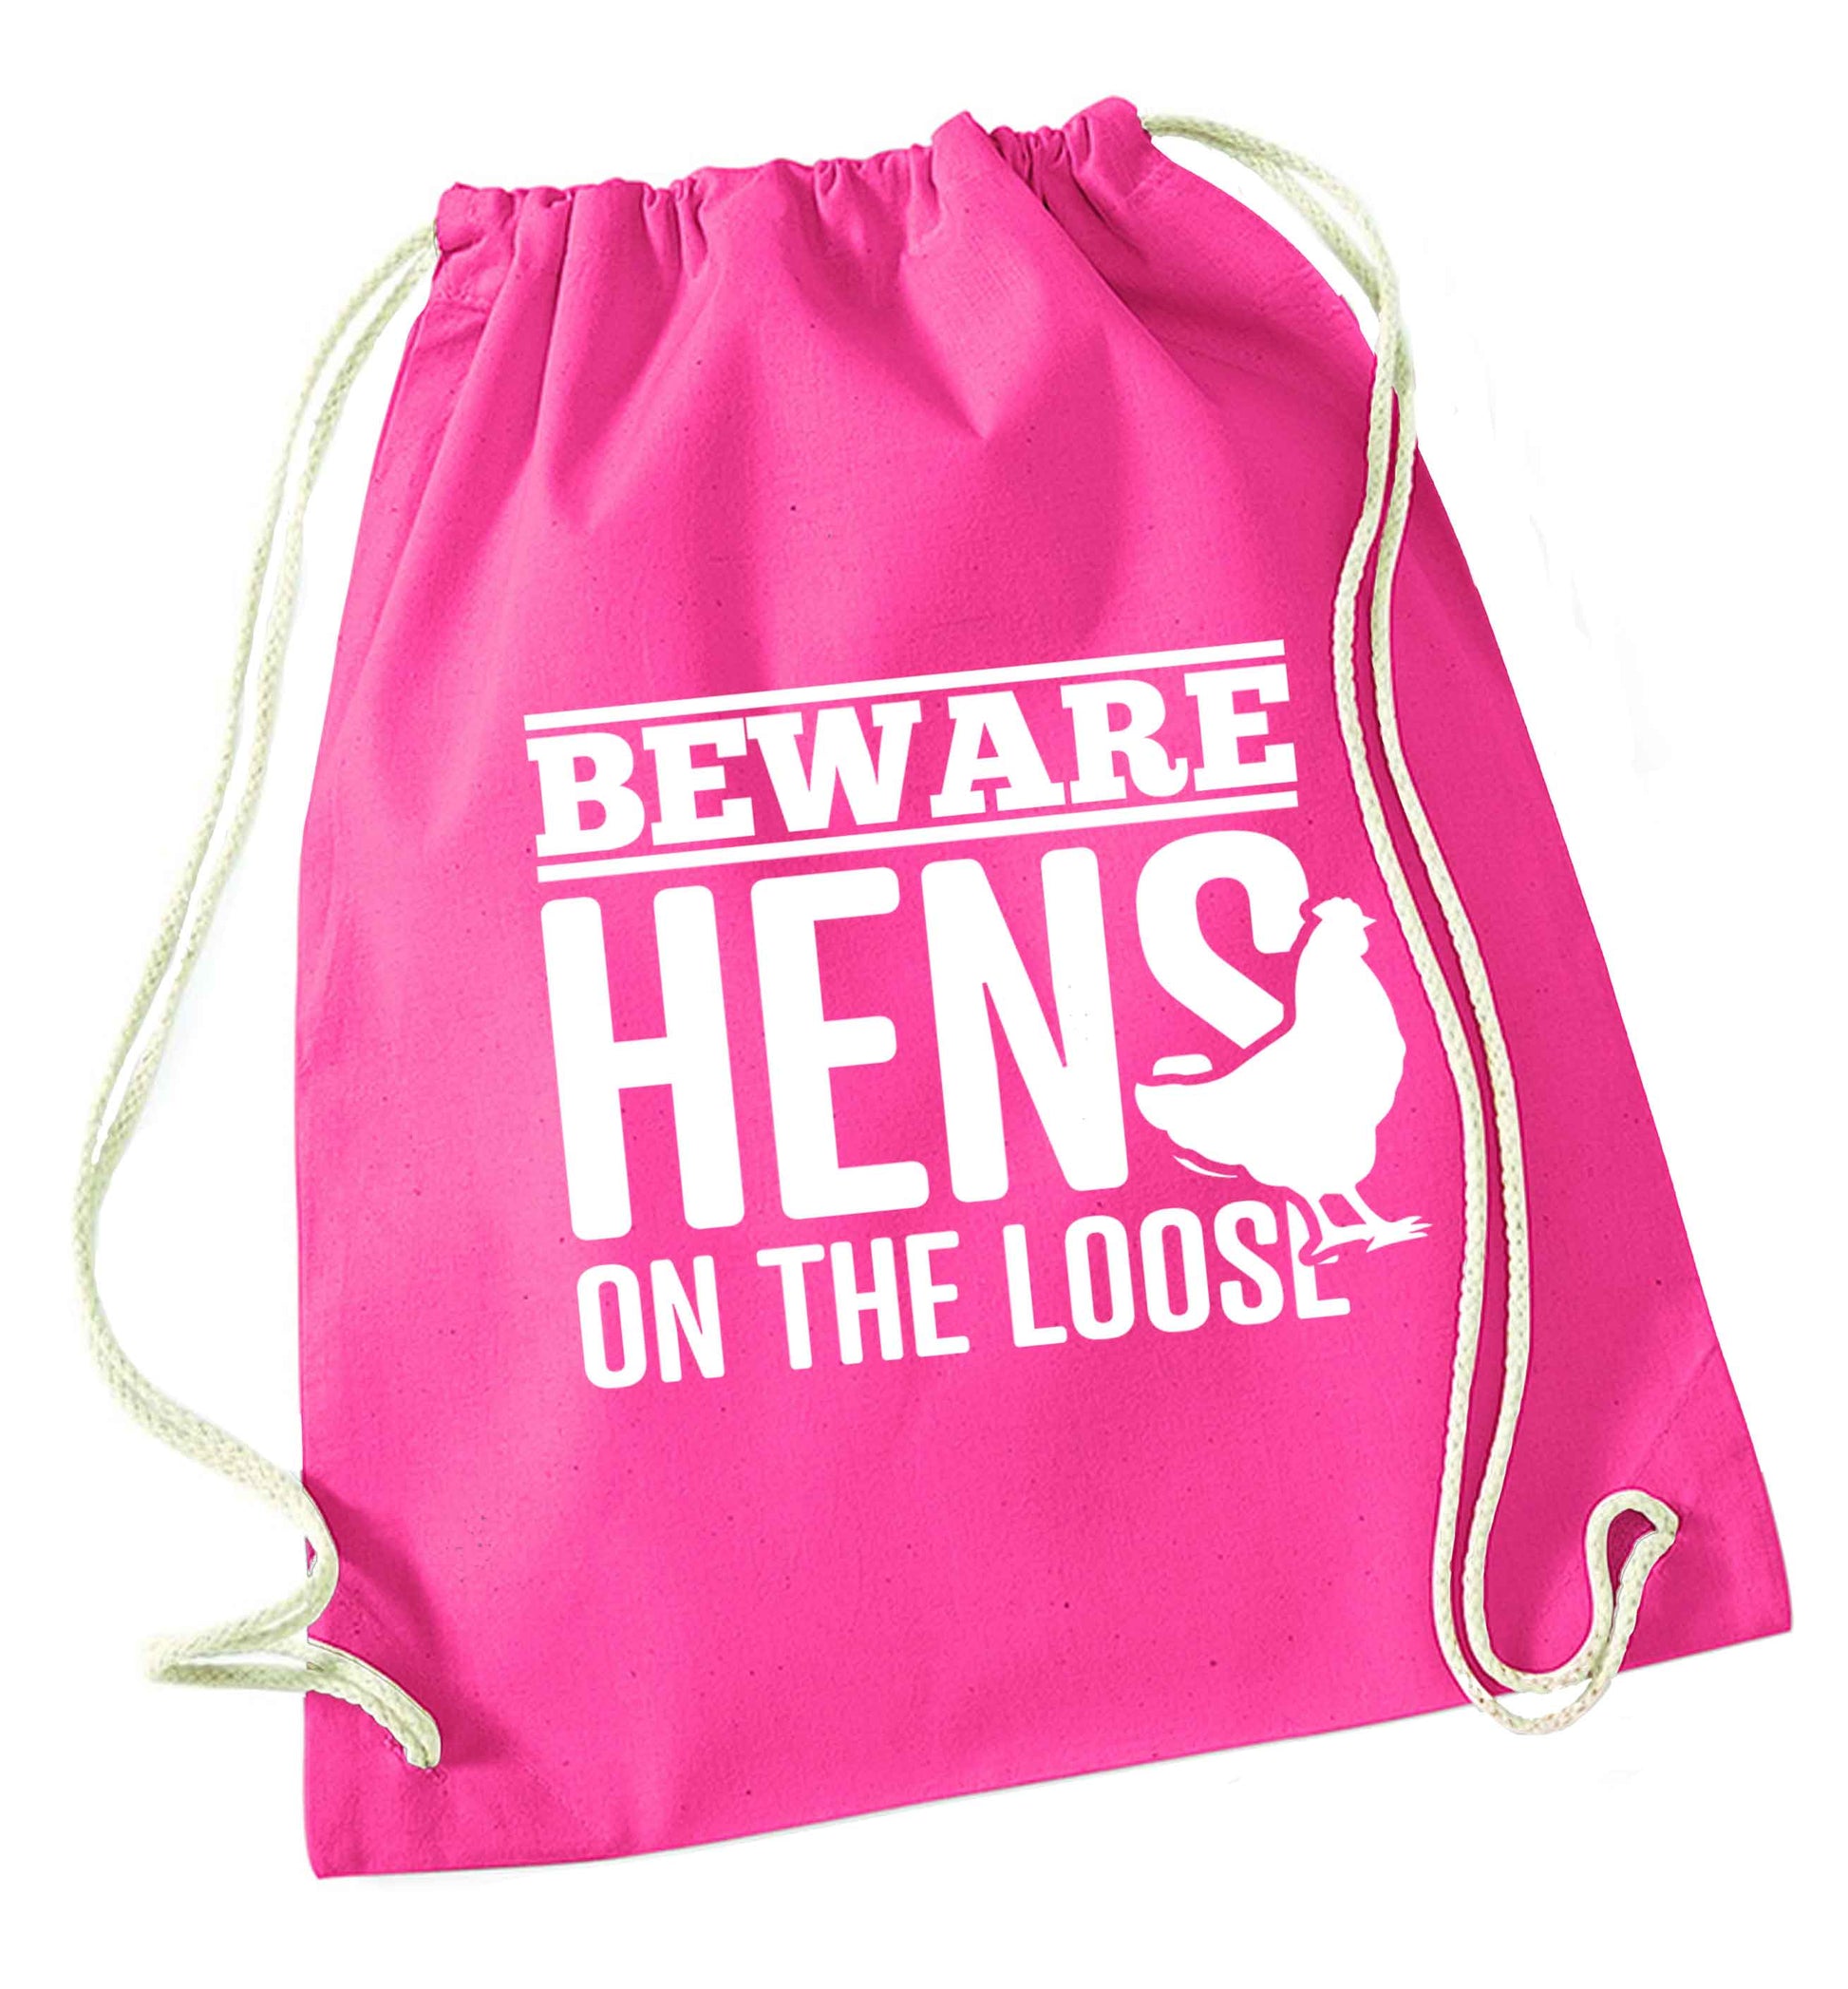 Beware hens on the loose pink drawstring bag